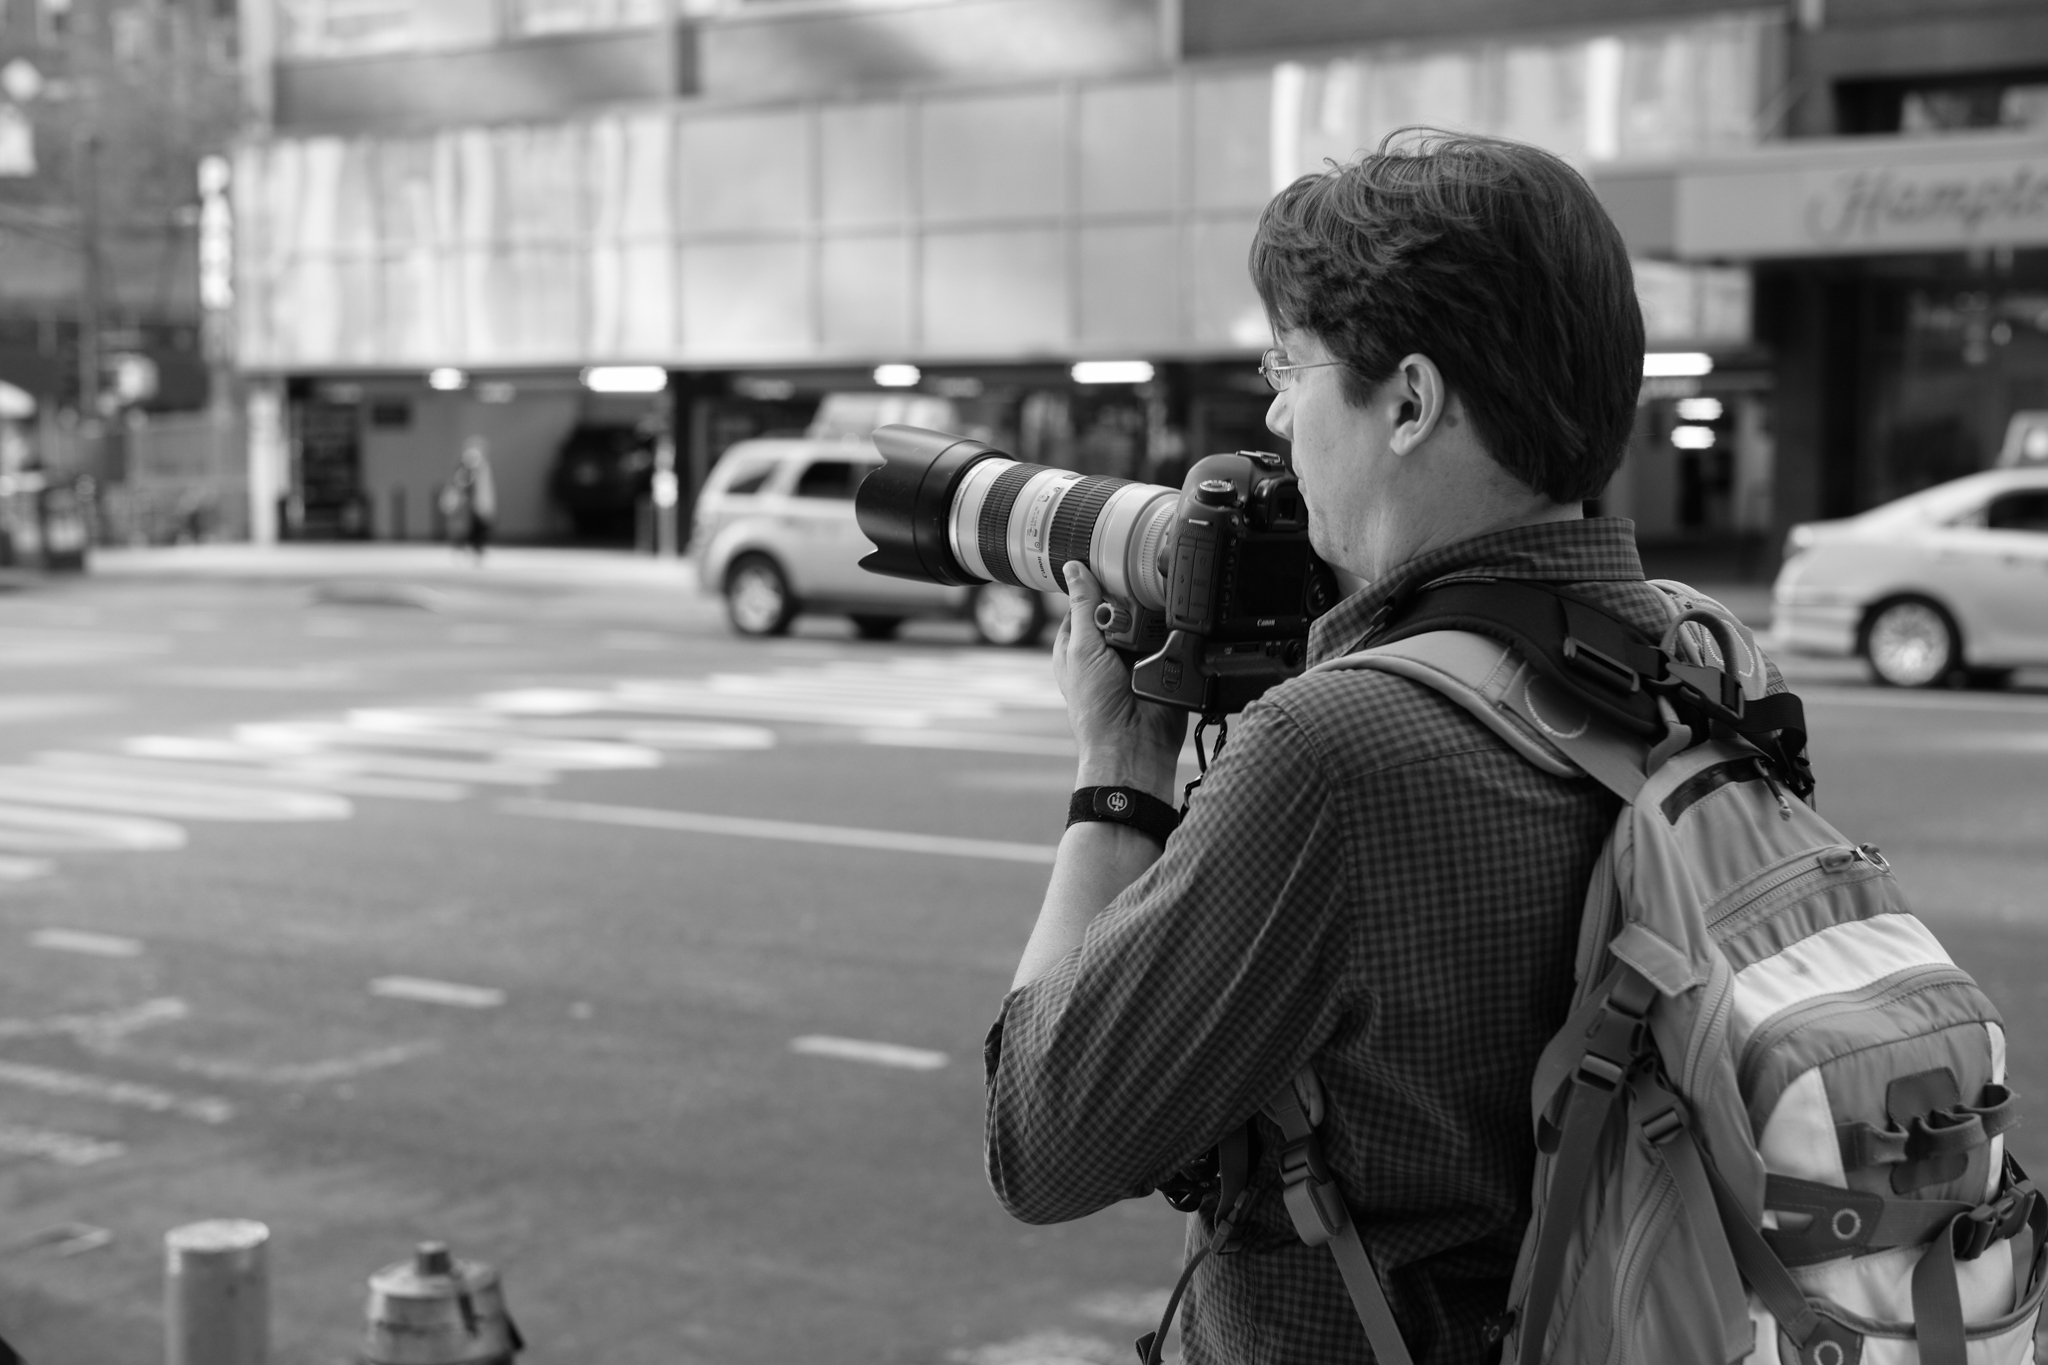 "Matthew Gore". Leica M-P, Summilux 50mm